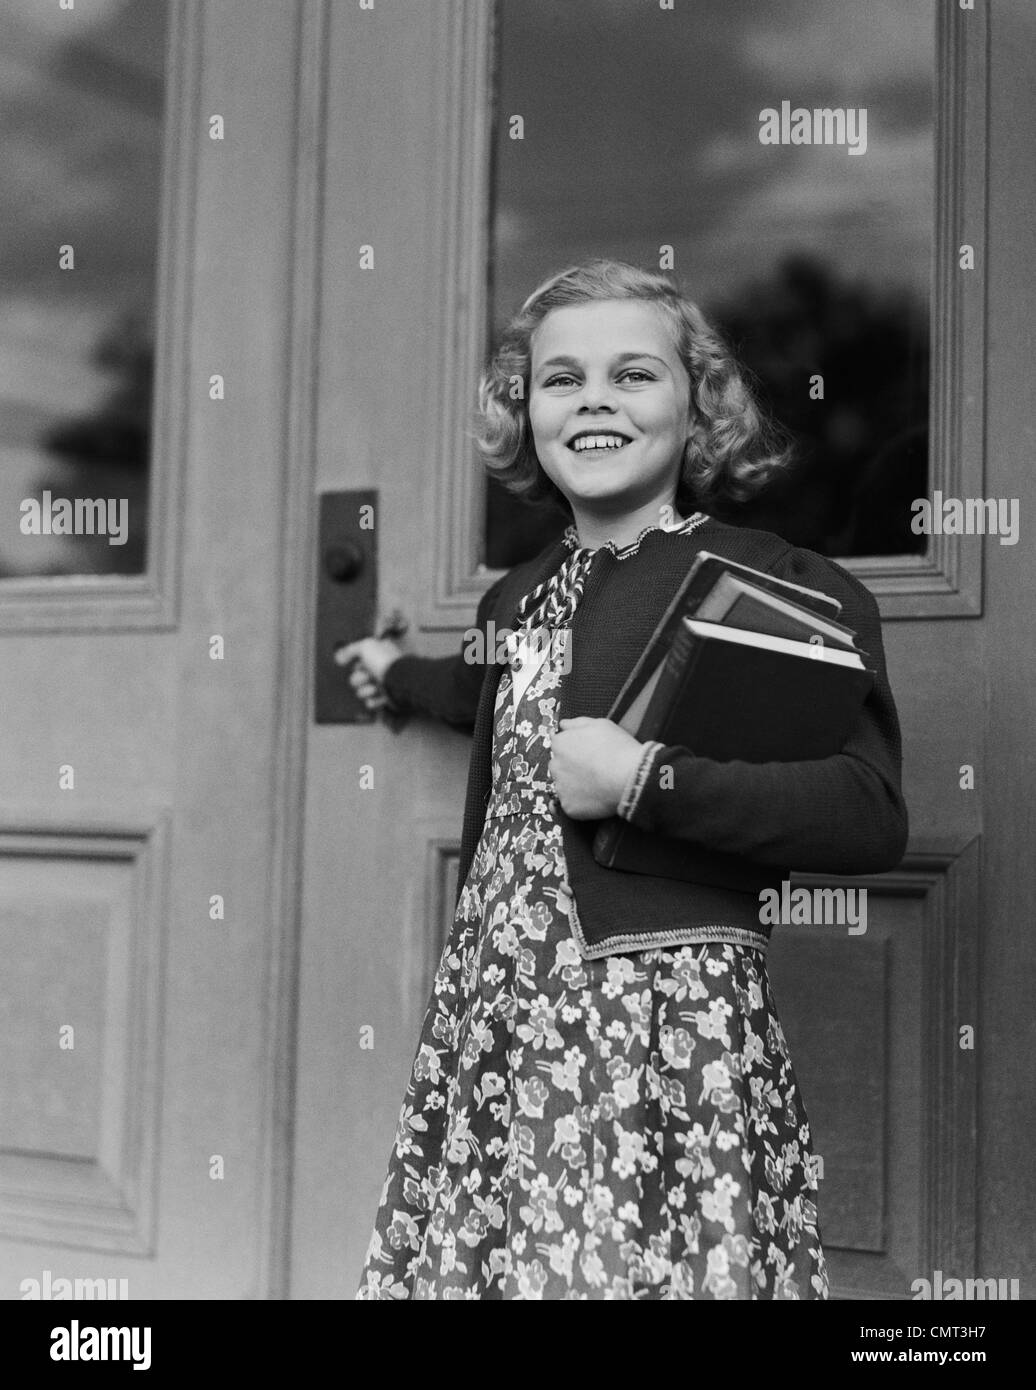 1940s SMILING GIRL PRINT DRESS HOLDING SCHOOL BOOKS OPENING DOOR Stock Photo